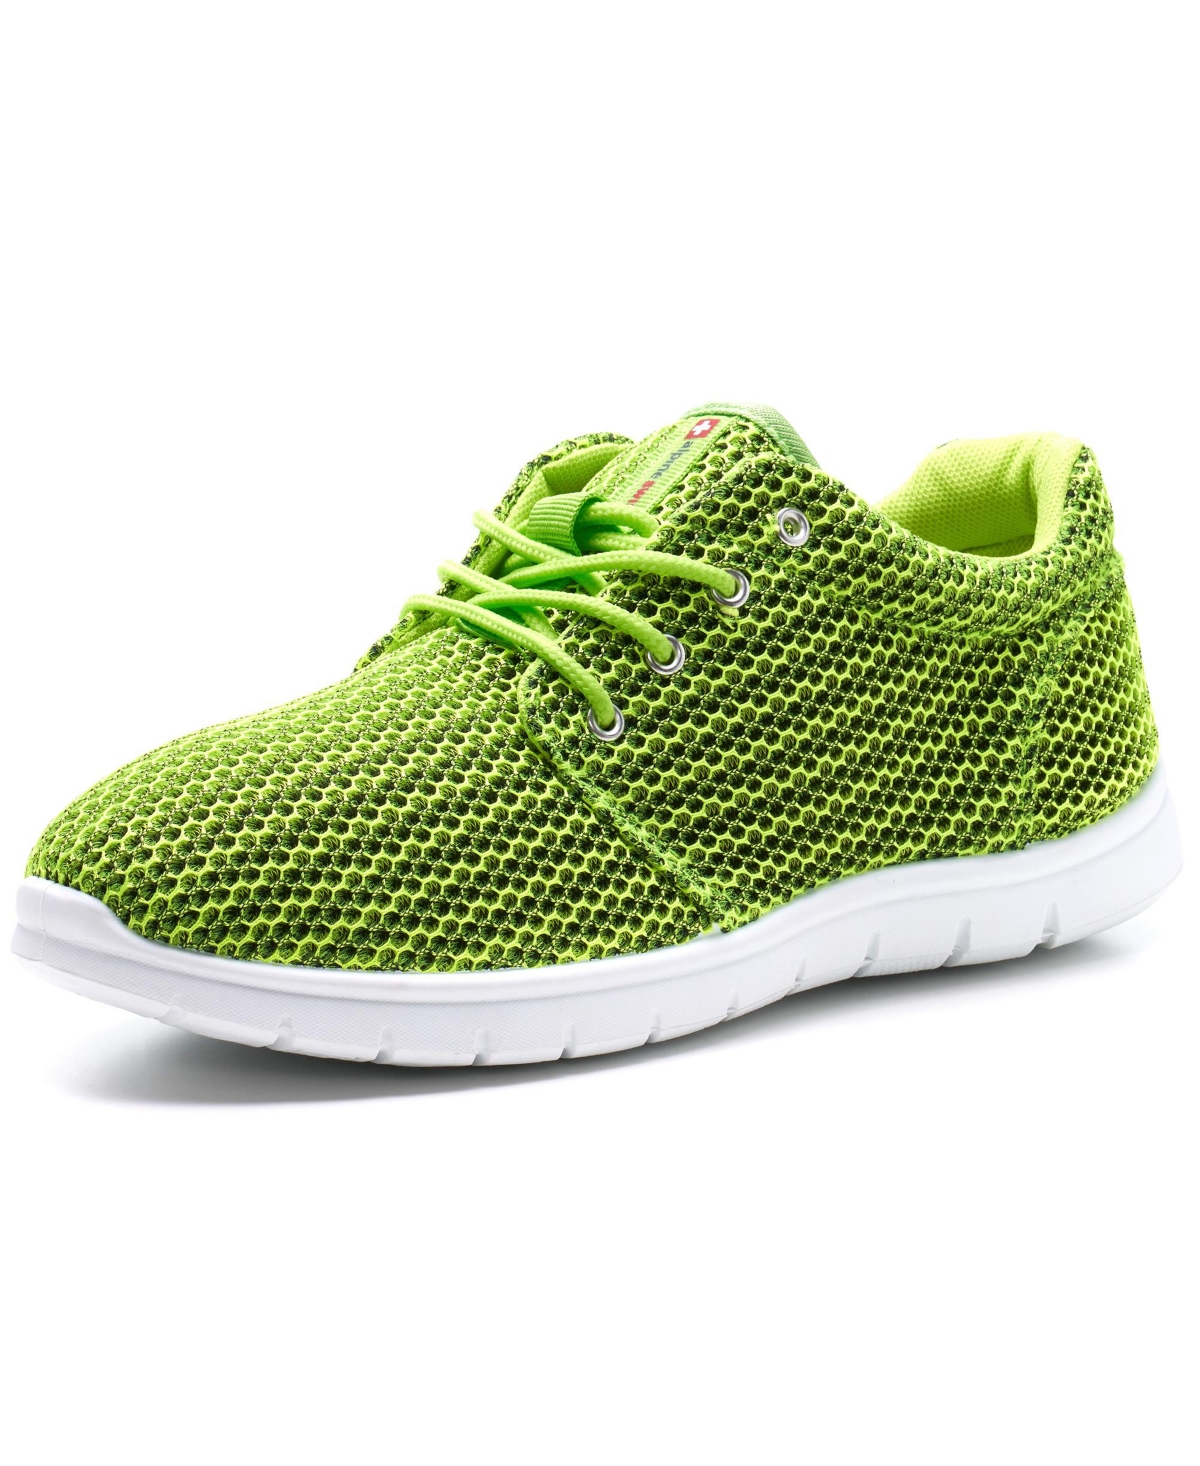 Kilian Mesh Sneakers Casual Shoes Mens & Womens Lightweight Trainer - Green